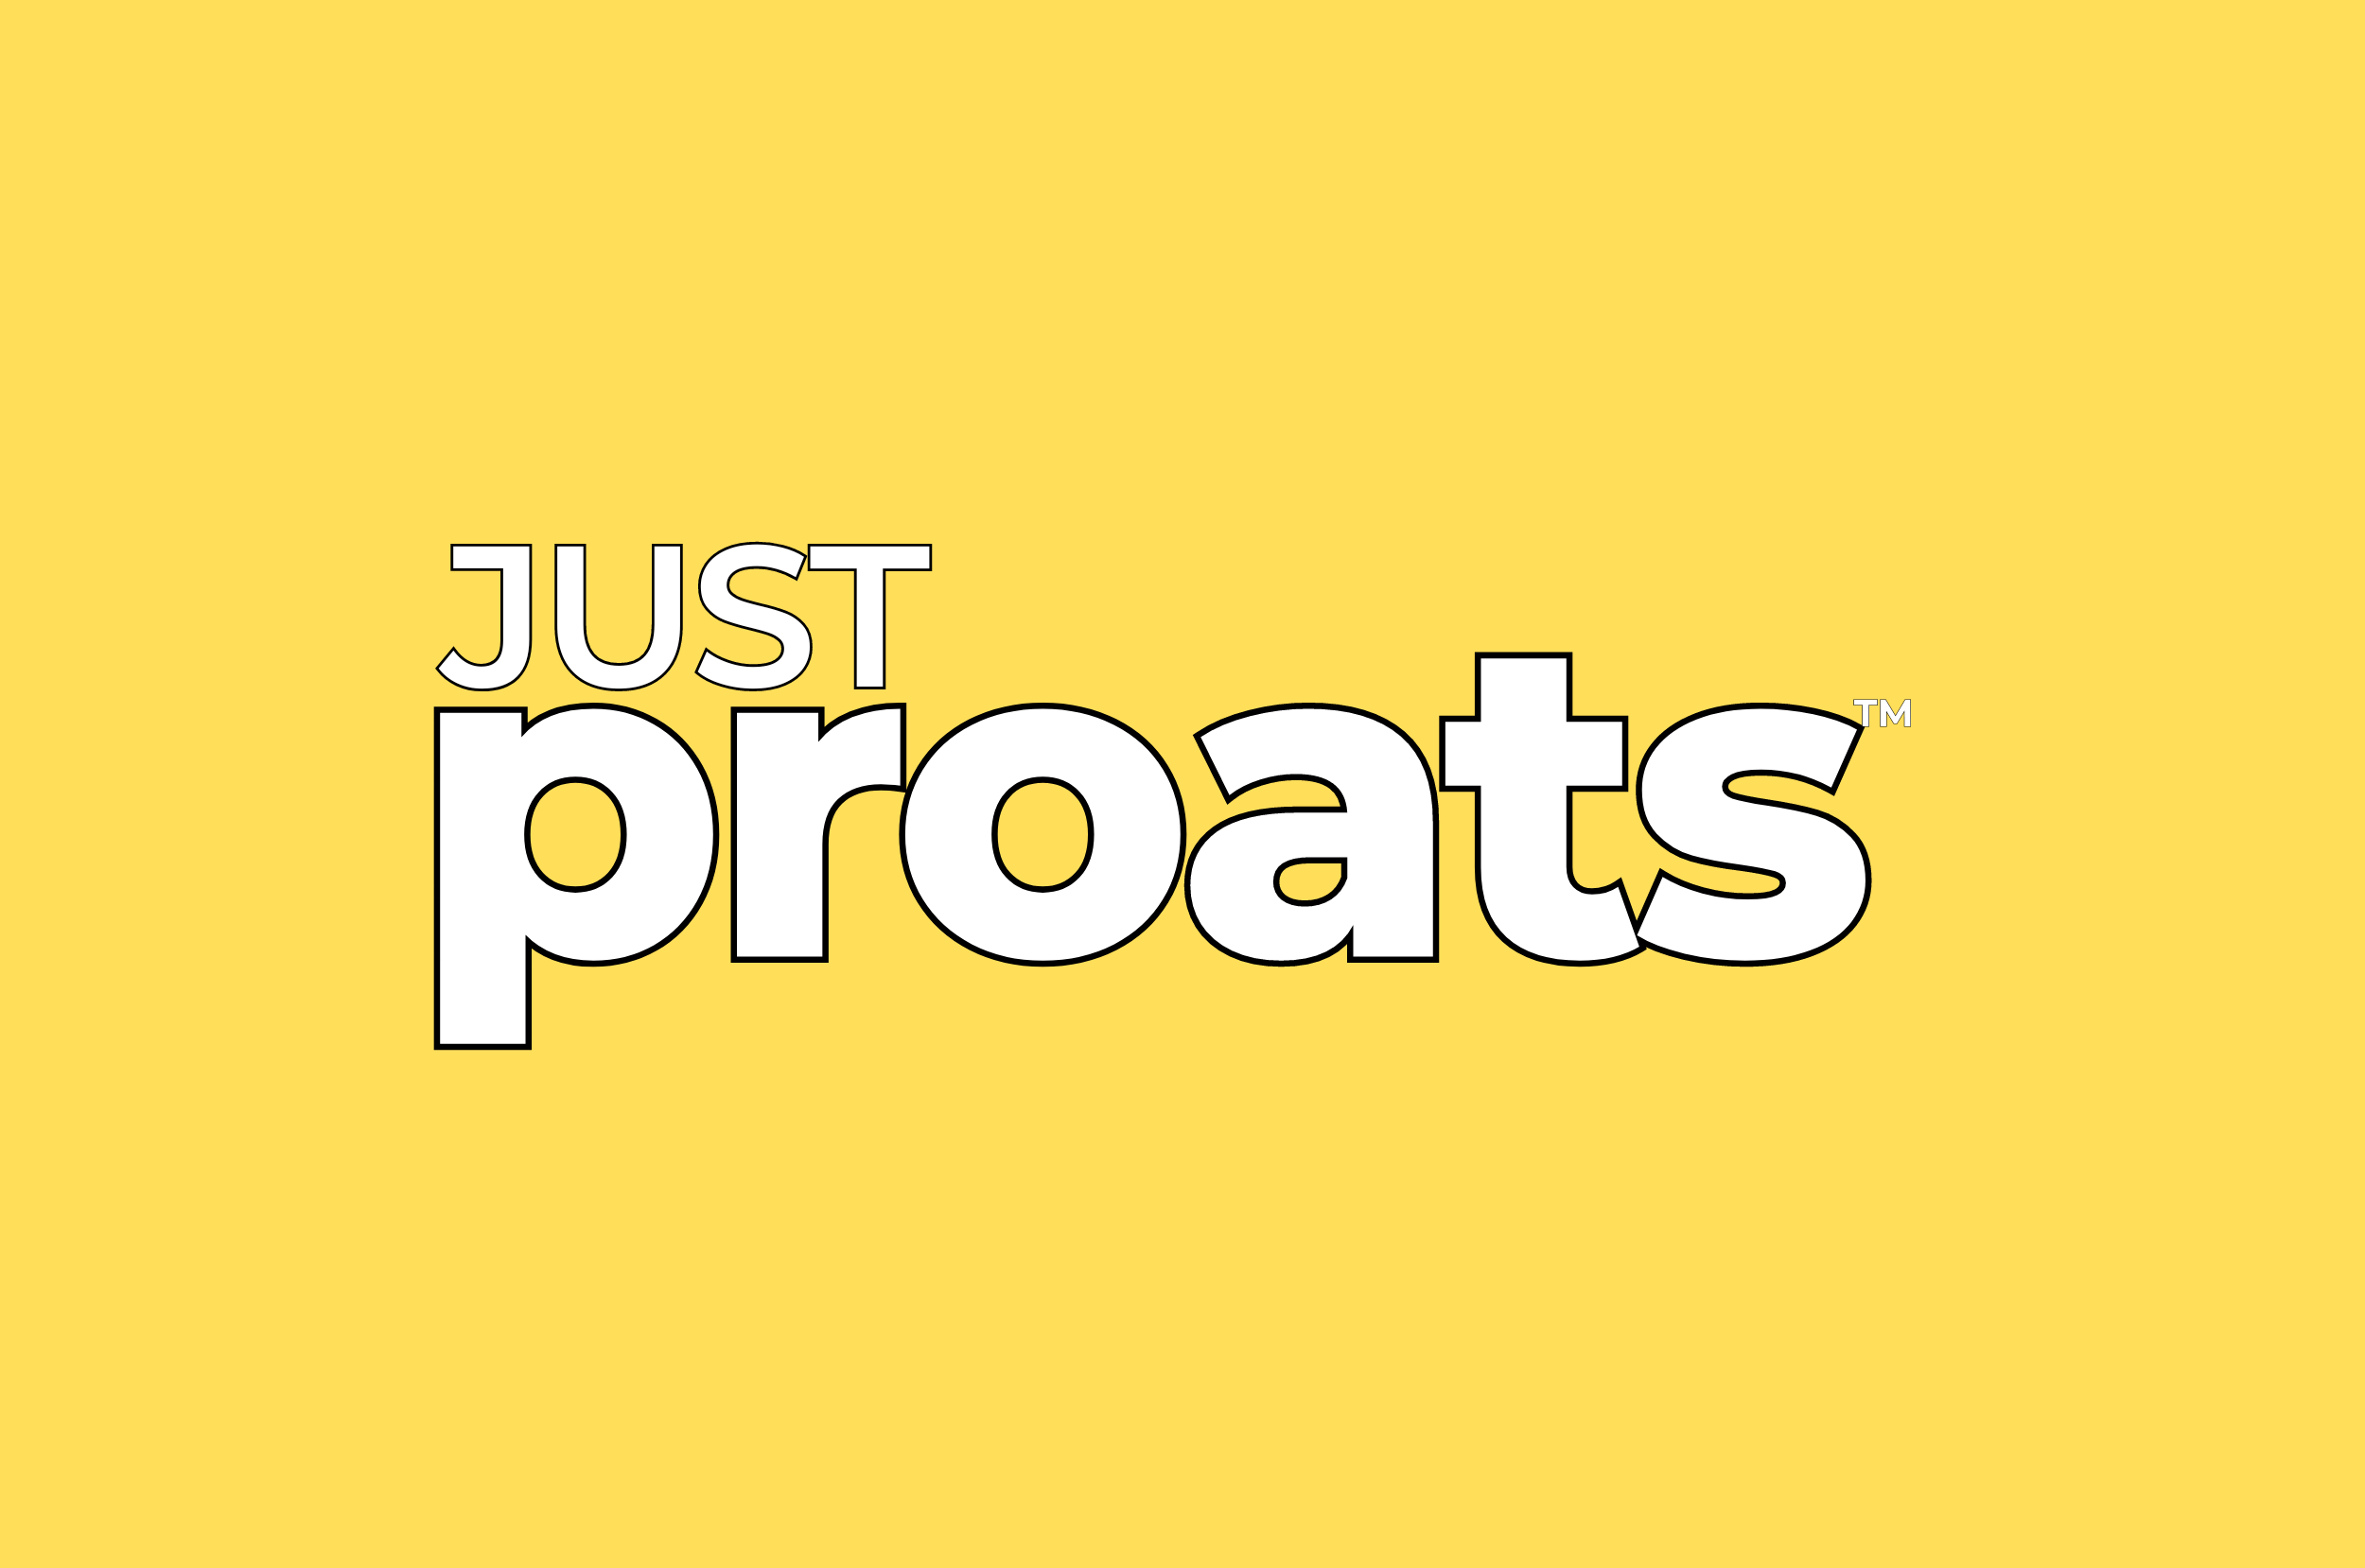 Just Proats